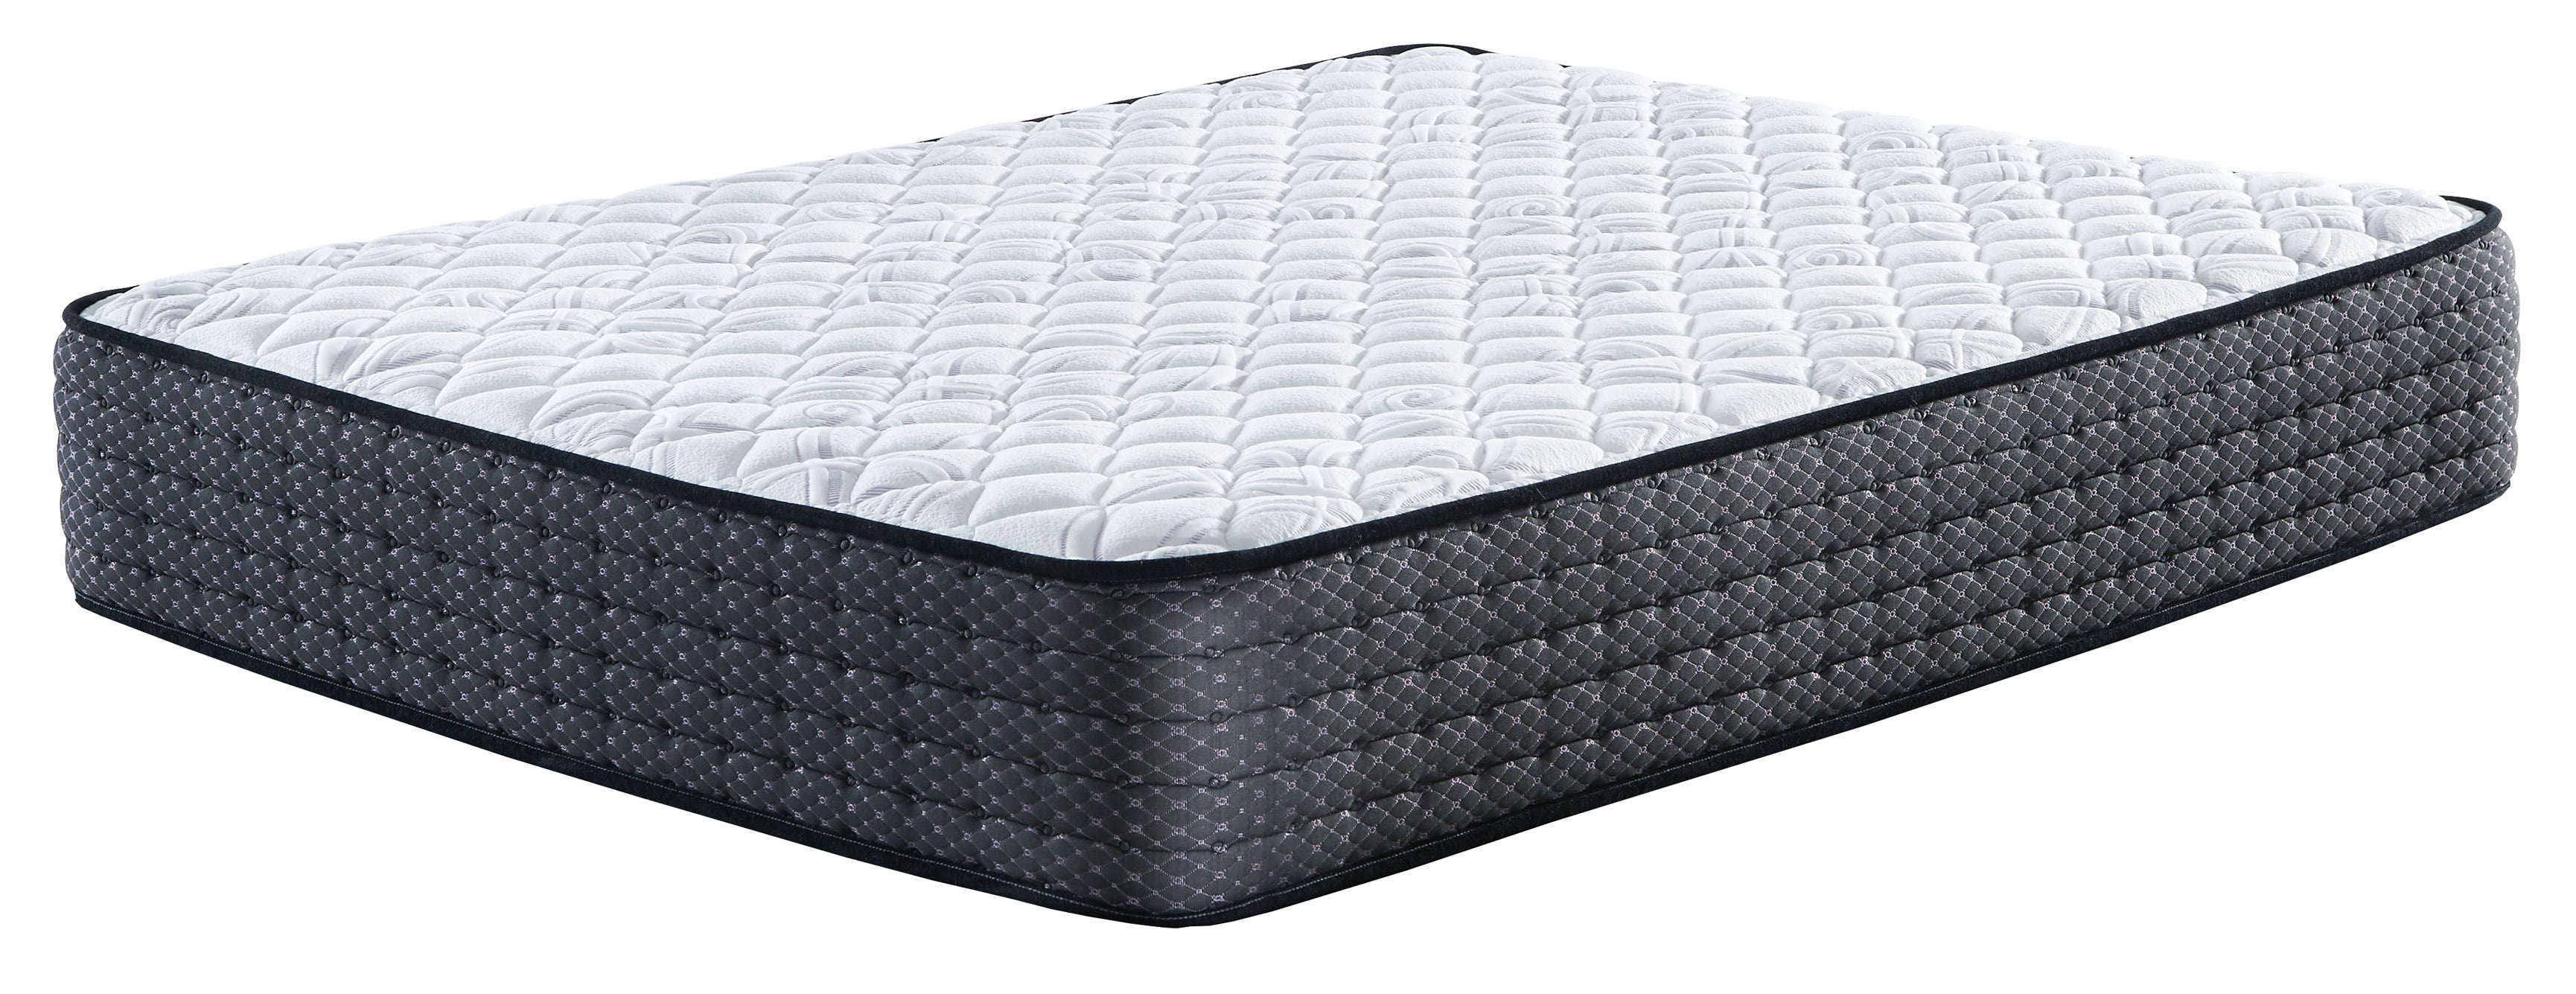 ashley limited edition firm mattress